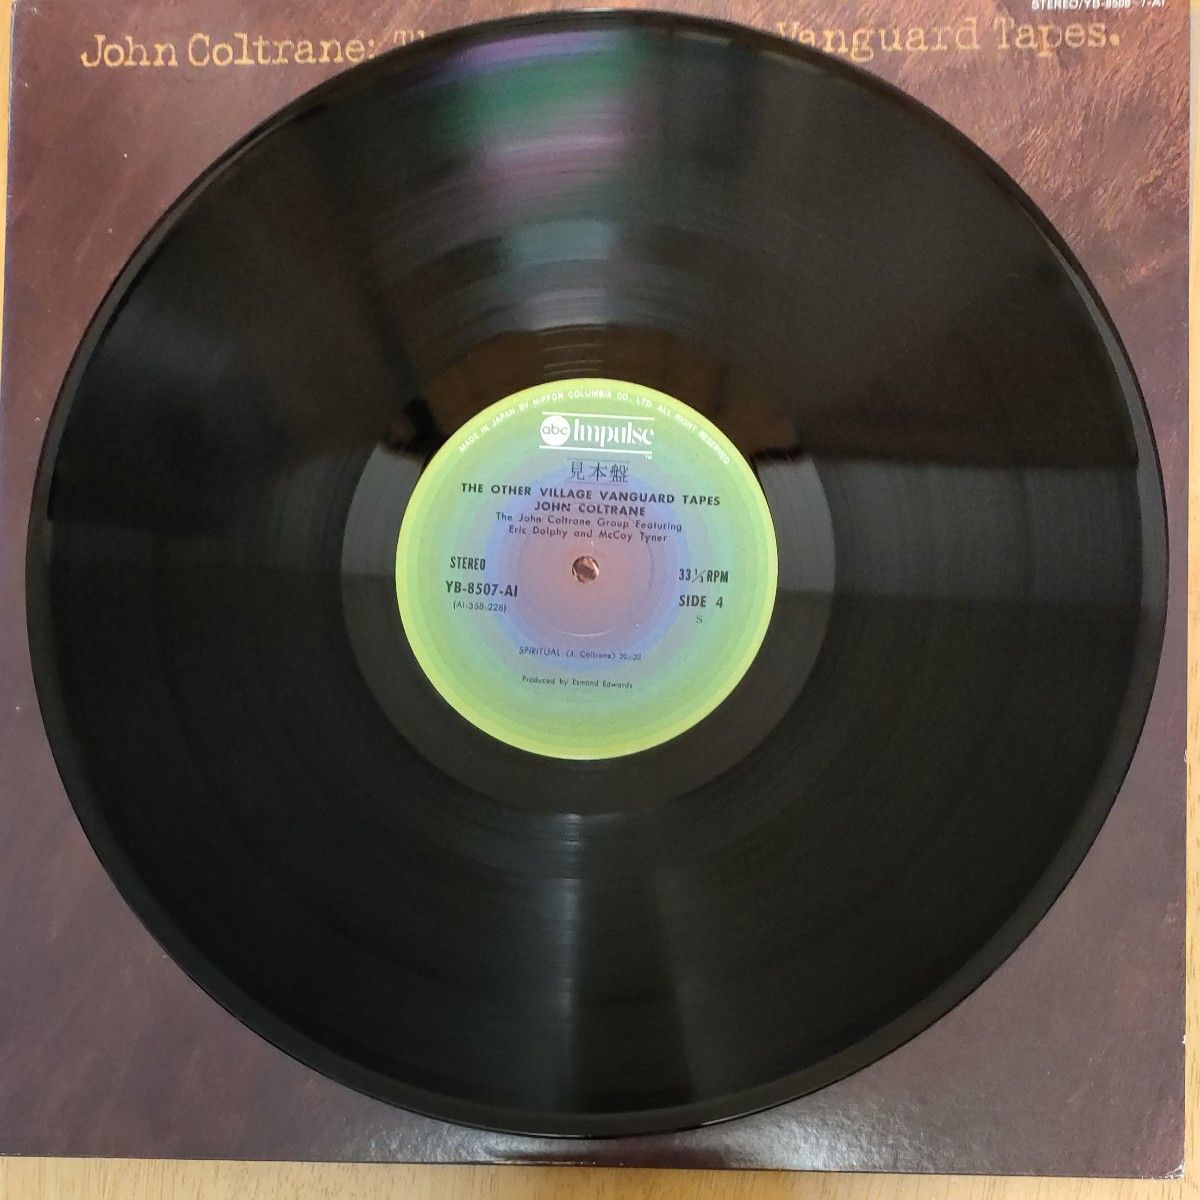 The Other Village Vanguard Tapes/JOHN COLTRANE